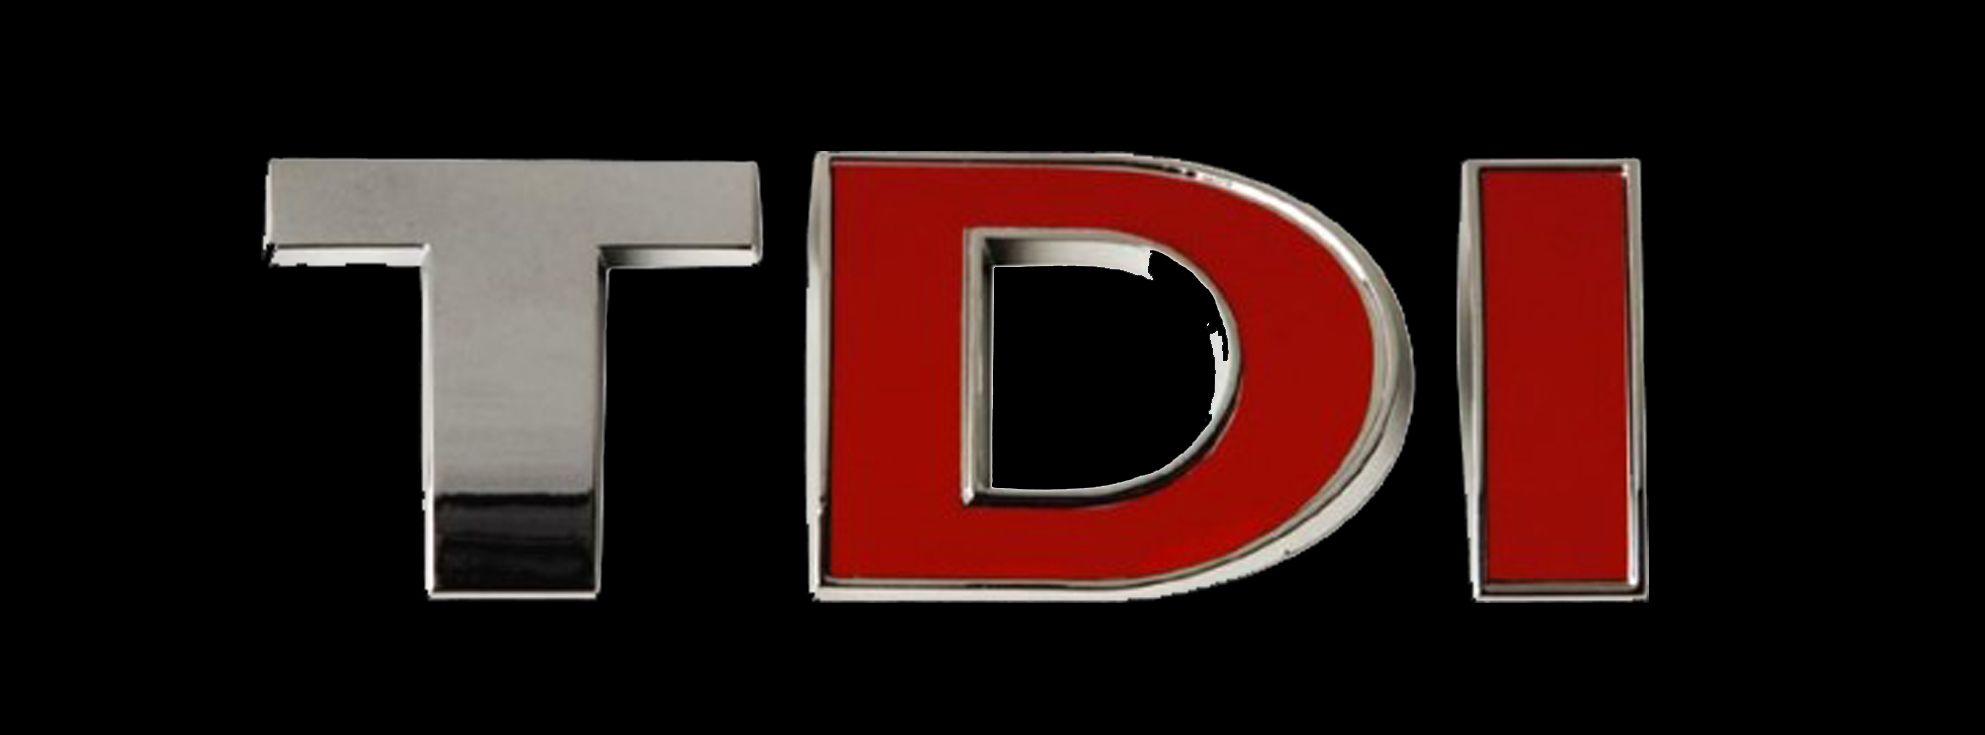 TDI Logo - Index of /logos